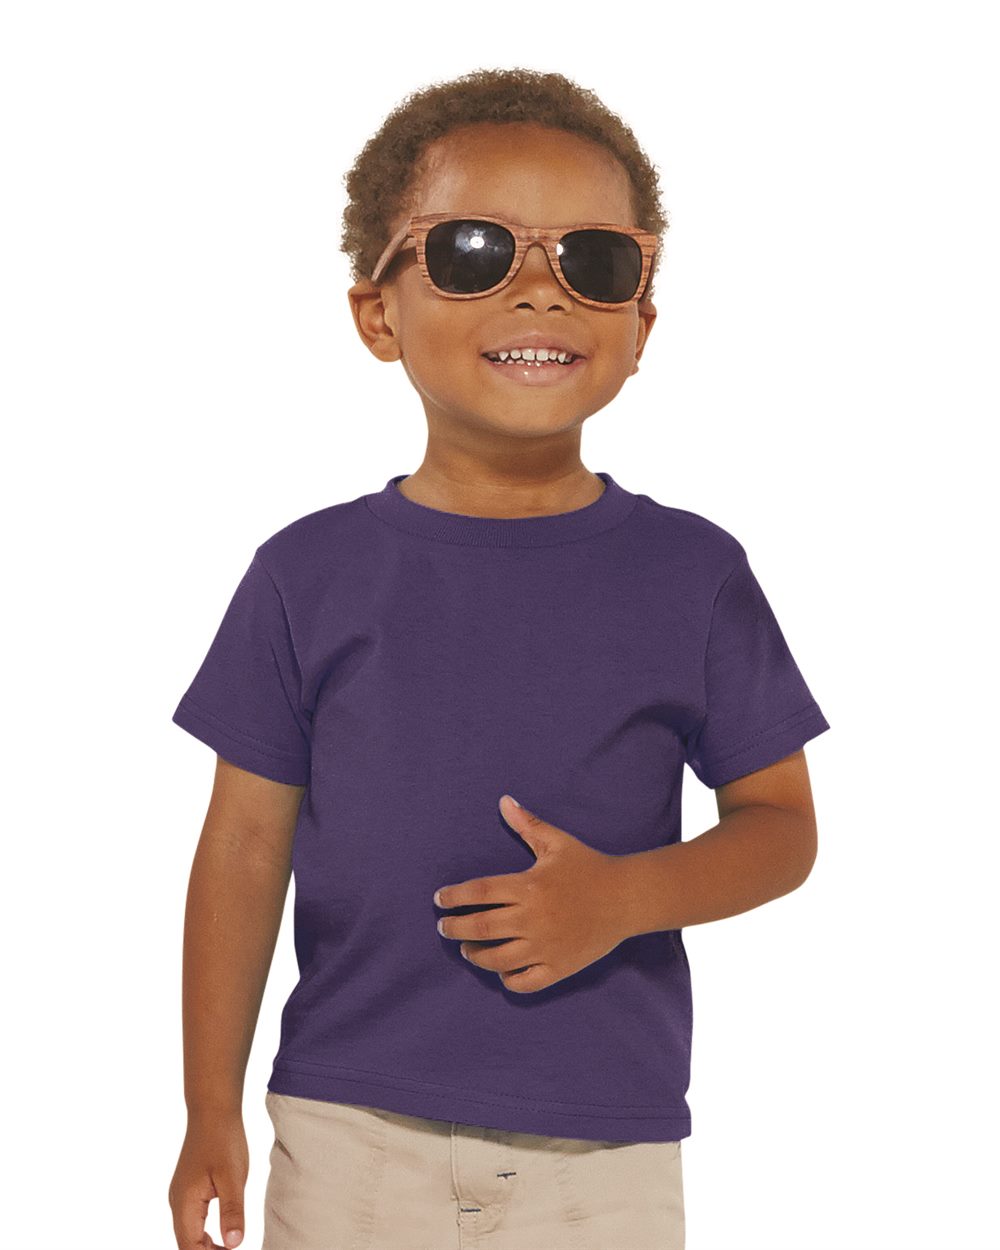 Rabbit Skins Kids Tees Tops Toddler Short Sleeve T-Shirt 3301T RS3301 